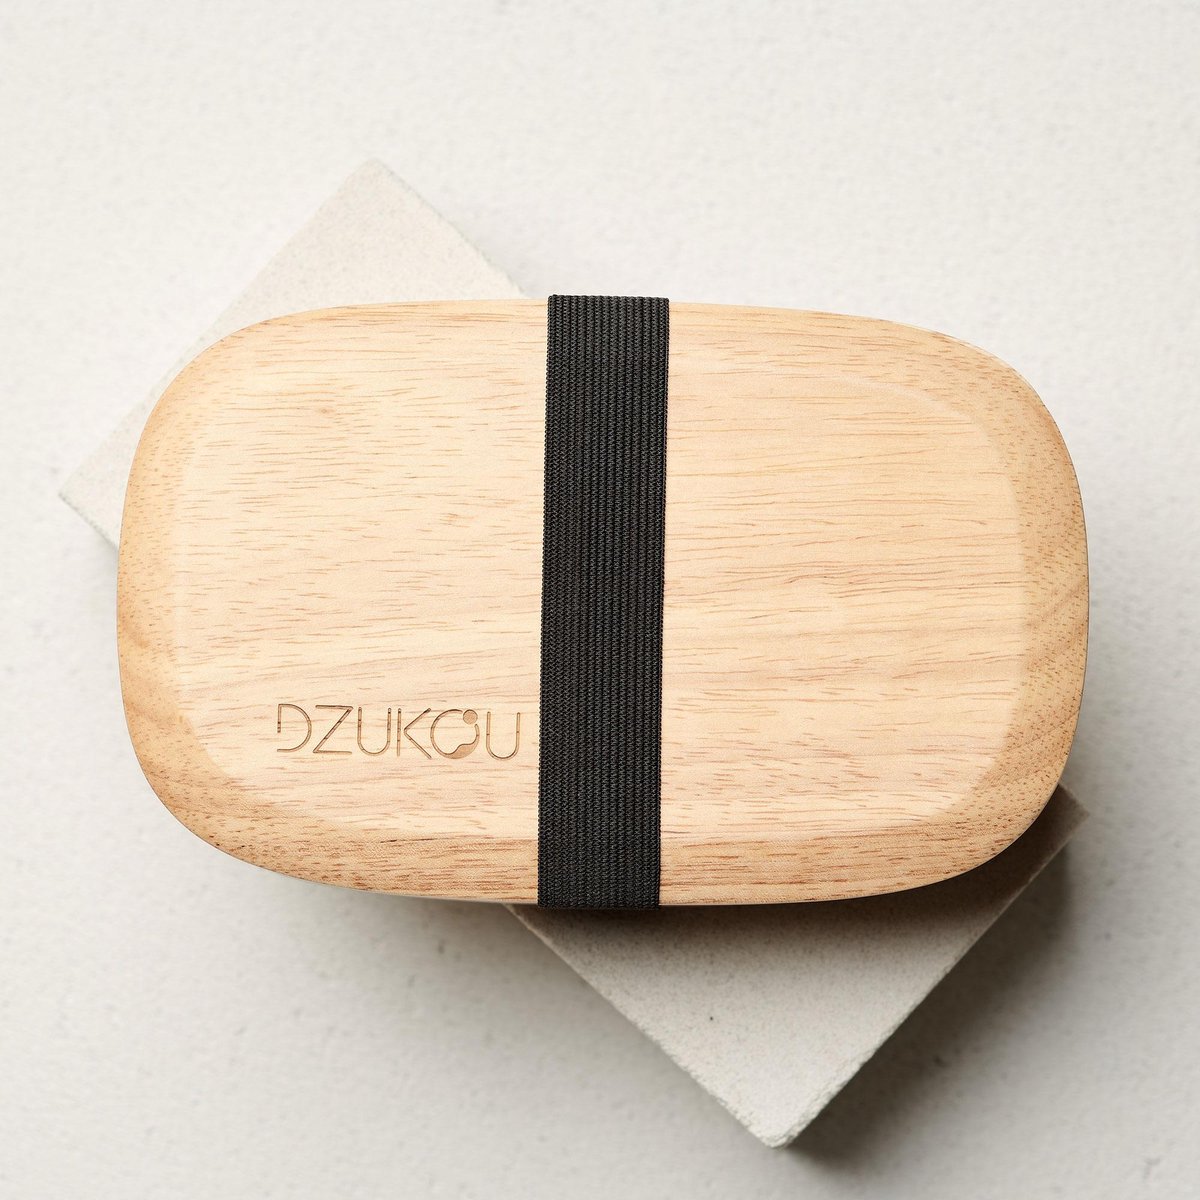 Dzukou Cho Oyu – Lunchbox – Bento Box - Houten Snackbox